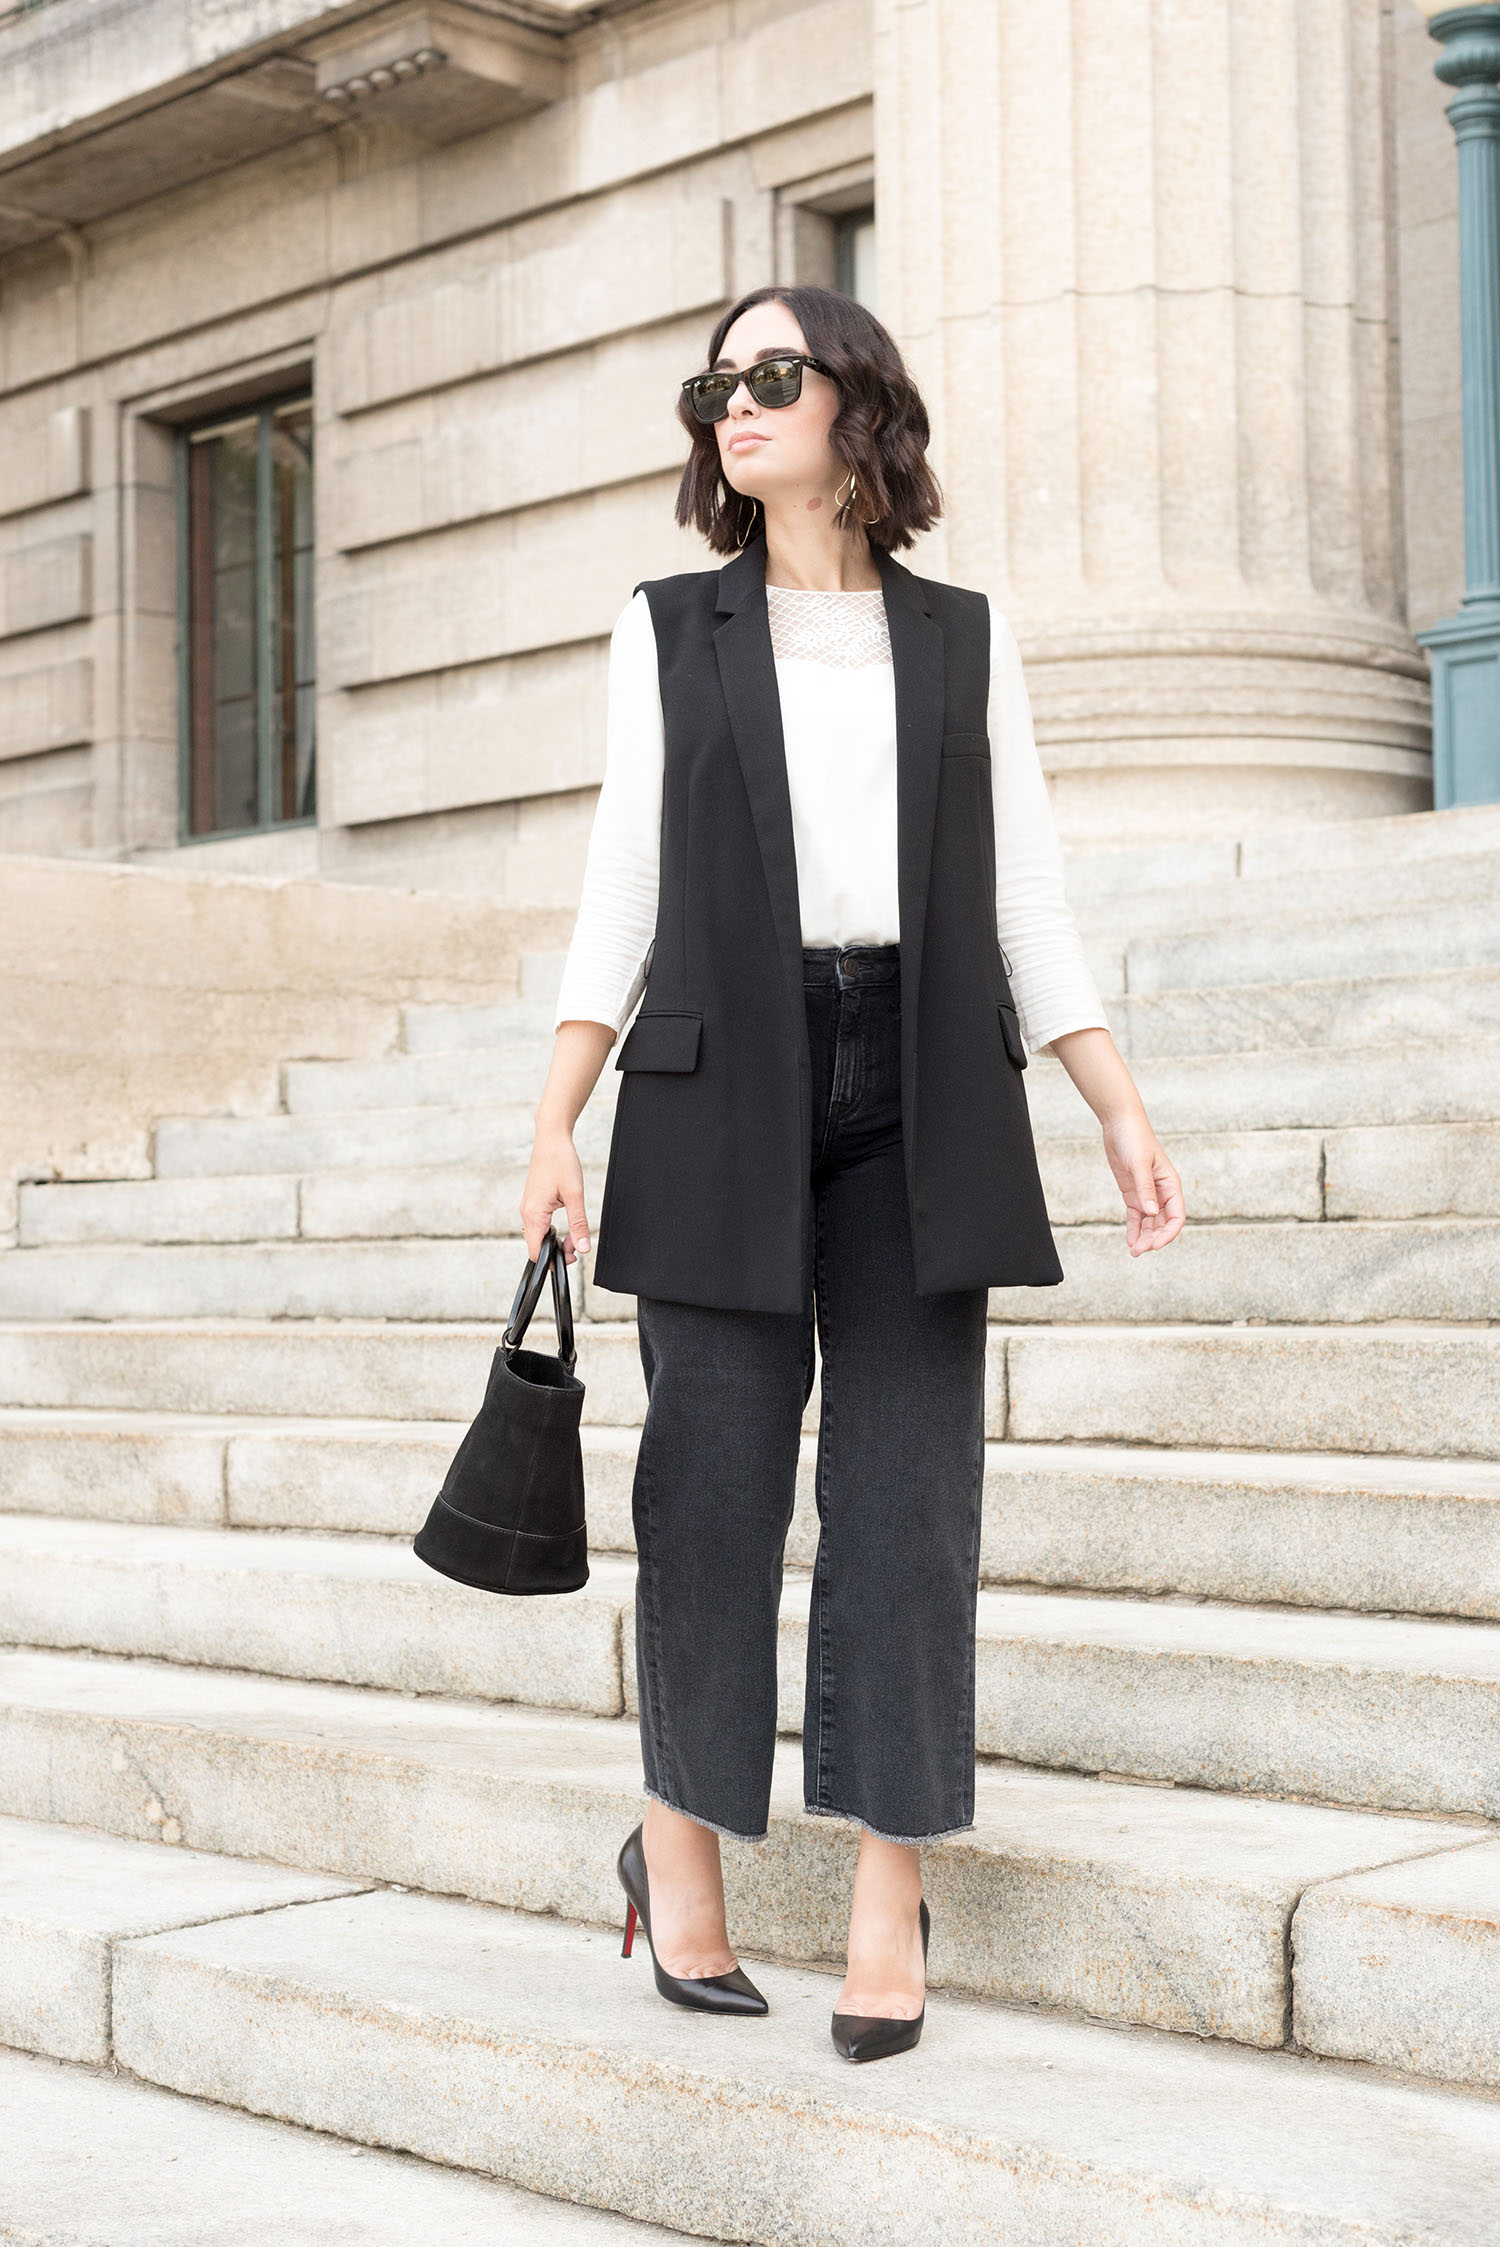 Top Canadian fashion blogger Cee Fardoe of Coco & Vera wears a white Sezane blouse and Mavi jeans